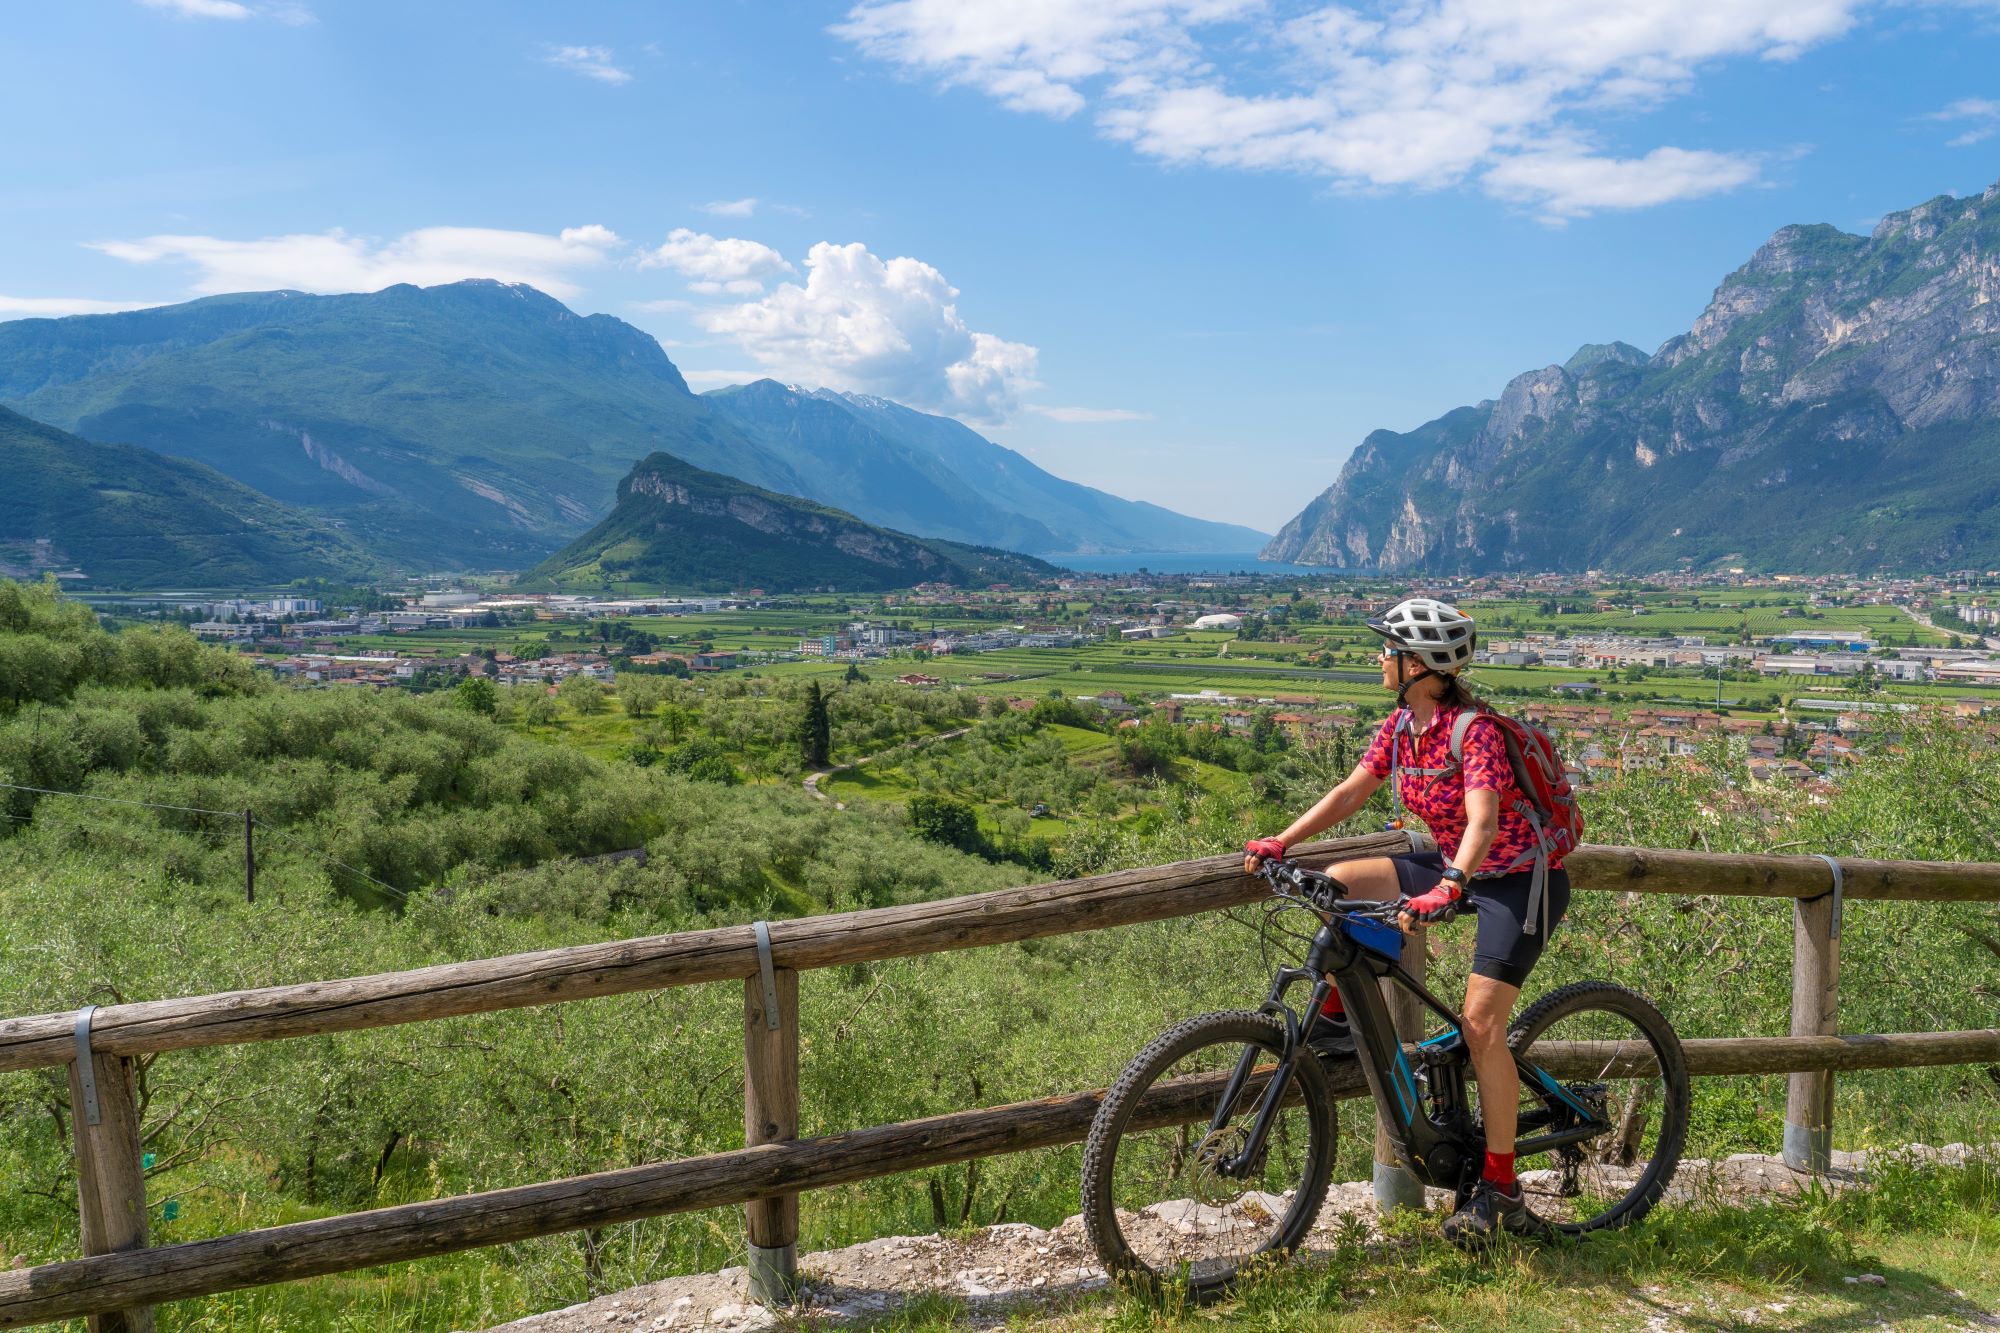 Mountain biking through scenic trails by Lake Garda